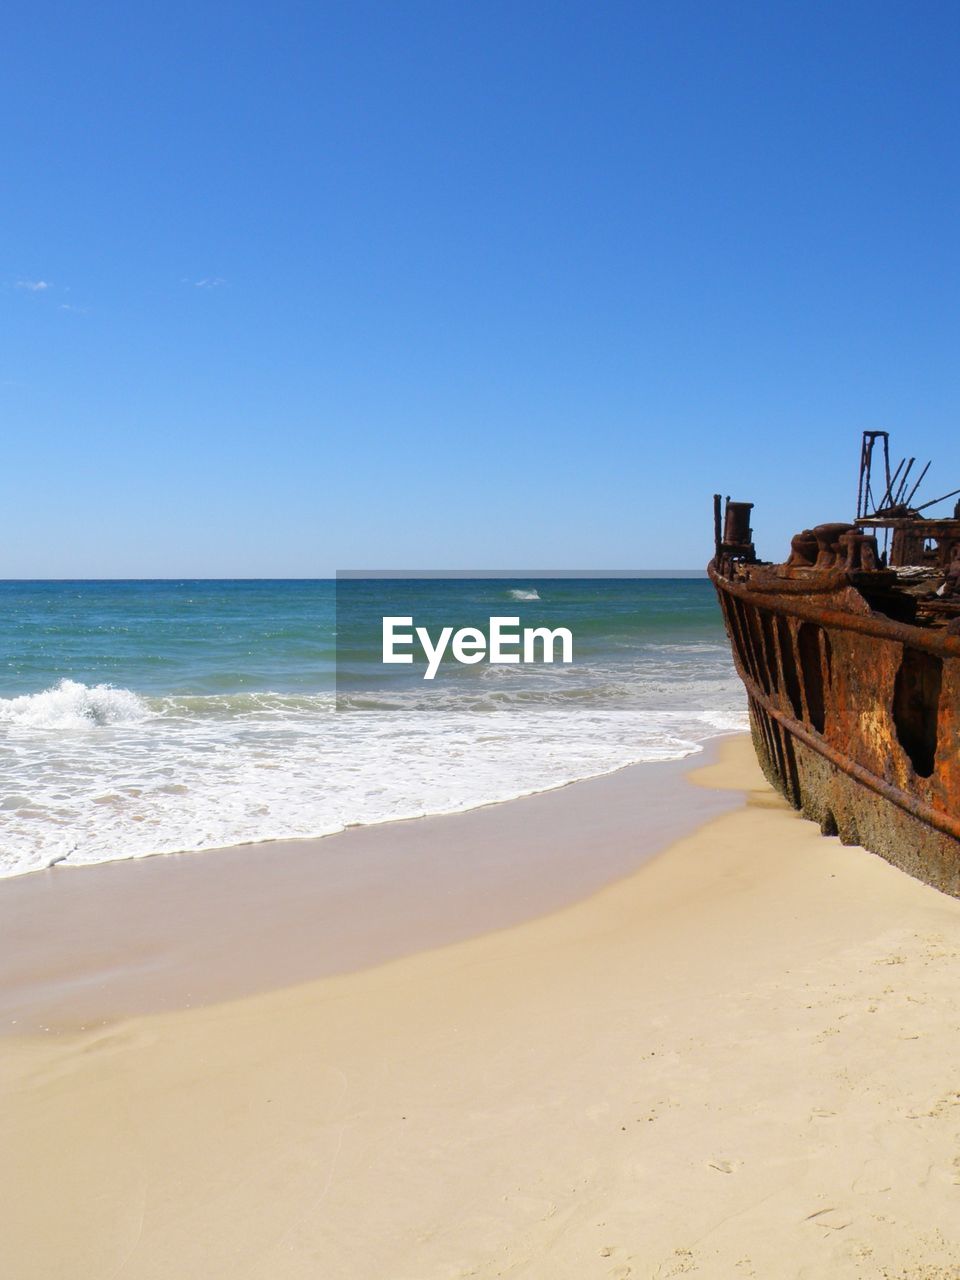 Rusty abandoned boat at beach